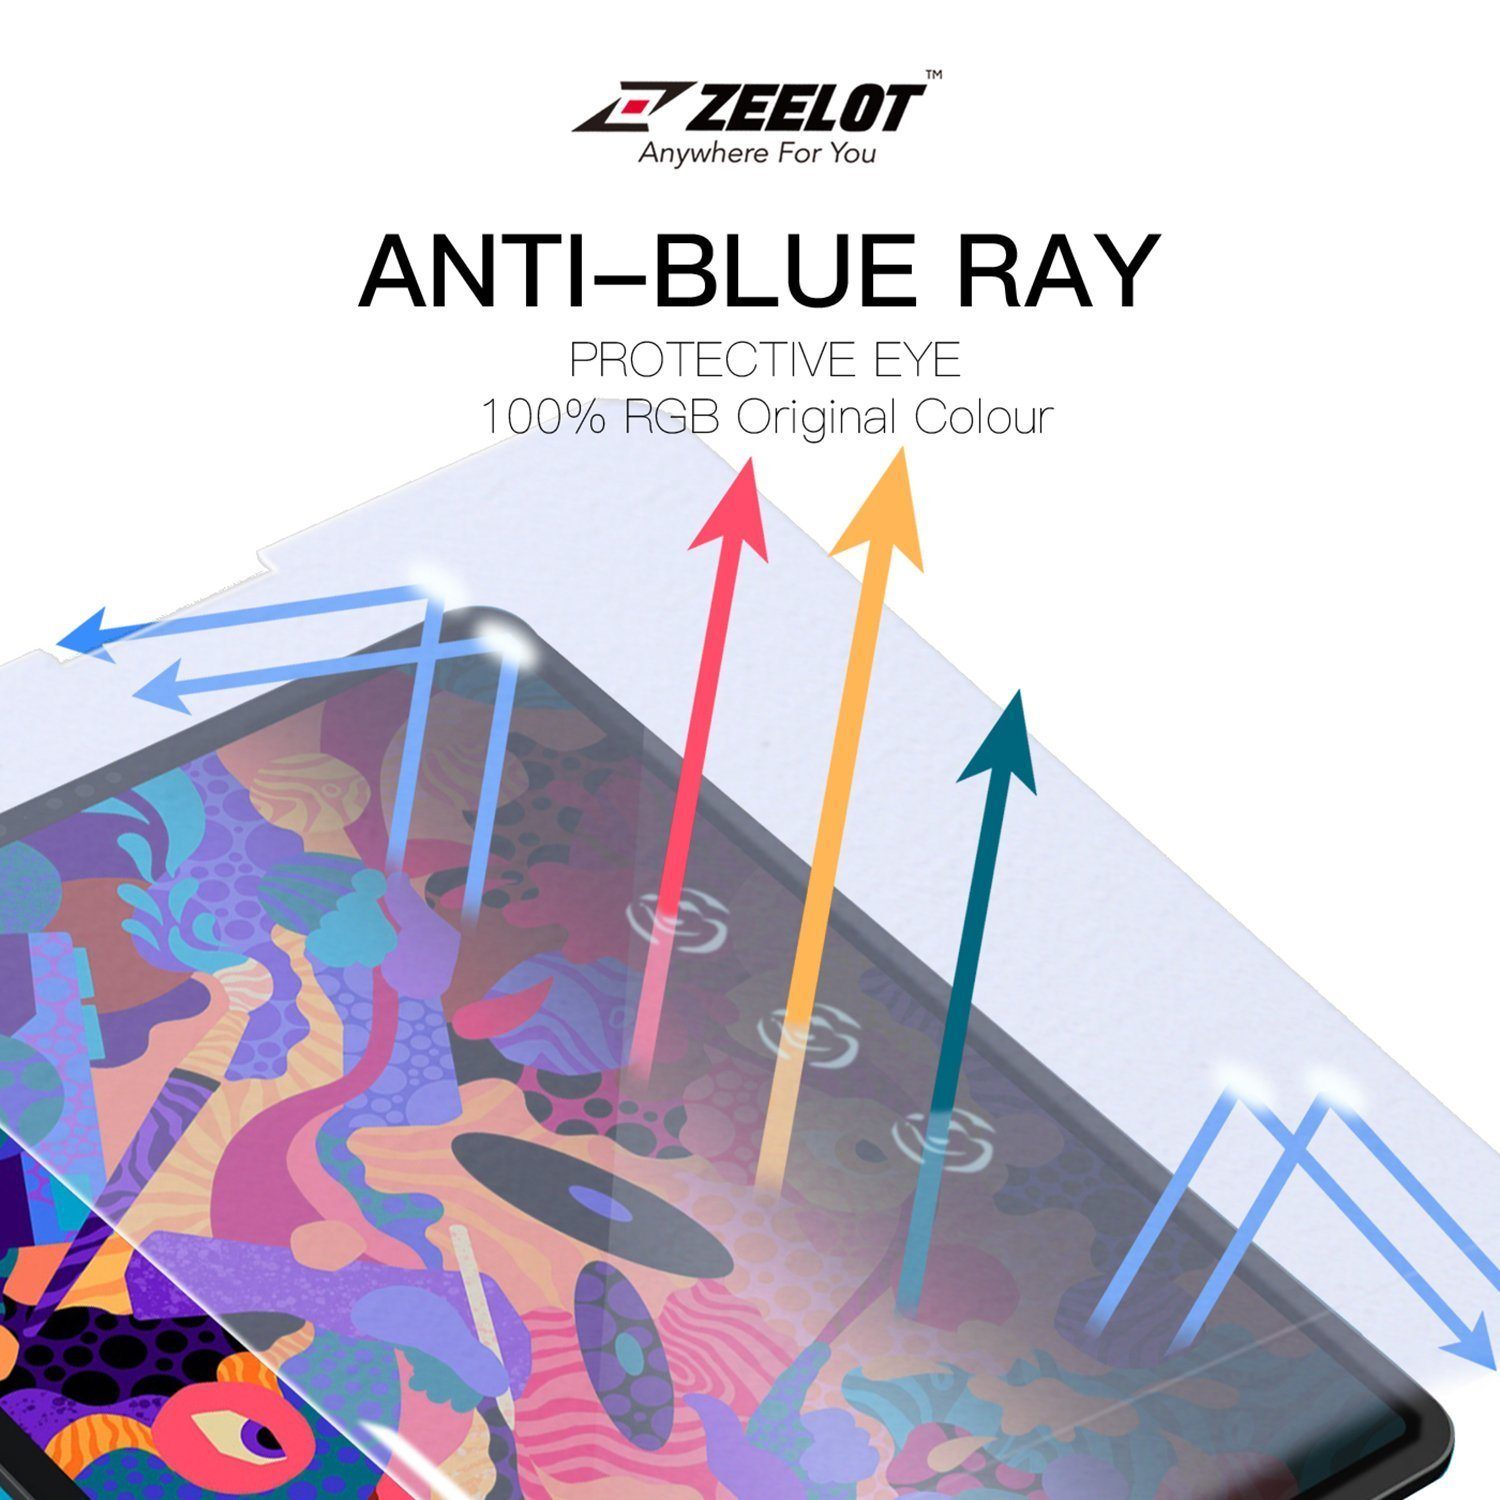 ZEELOT Paper Like Screen Protector for iPad Pro 12.9" (2021/2018), Anti Blue Ray Default ZEELOT 